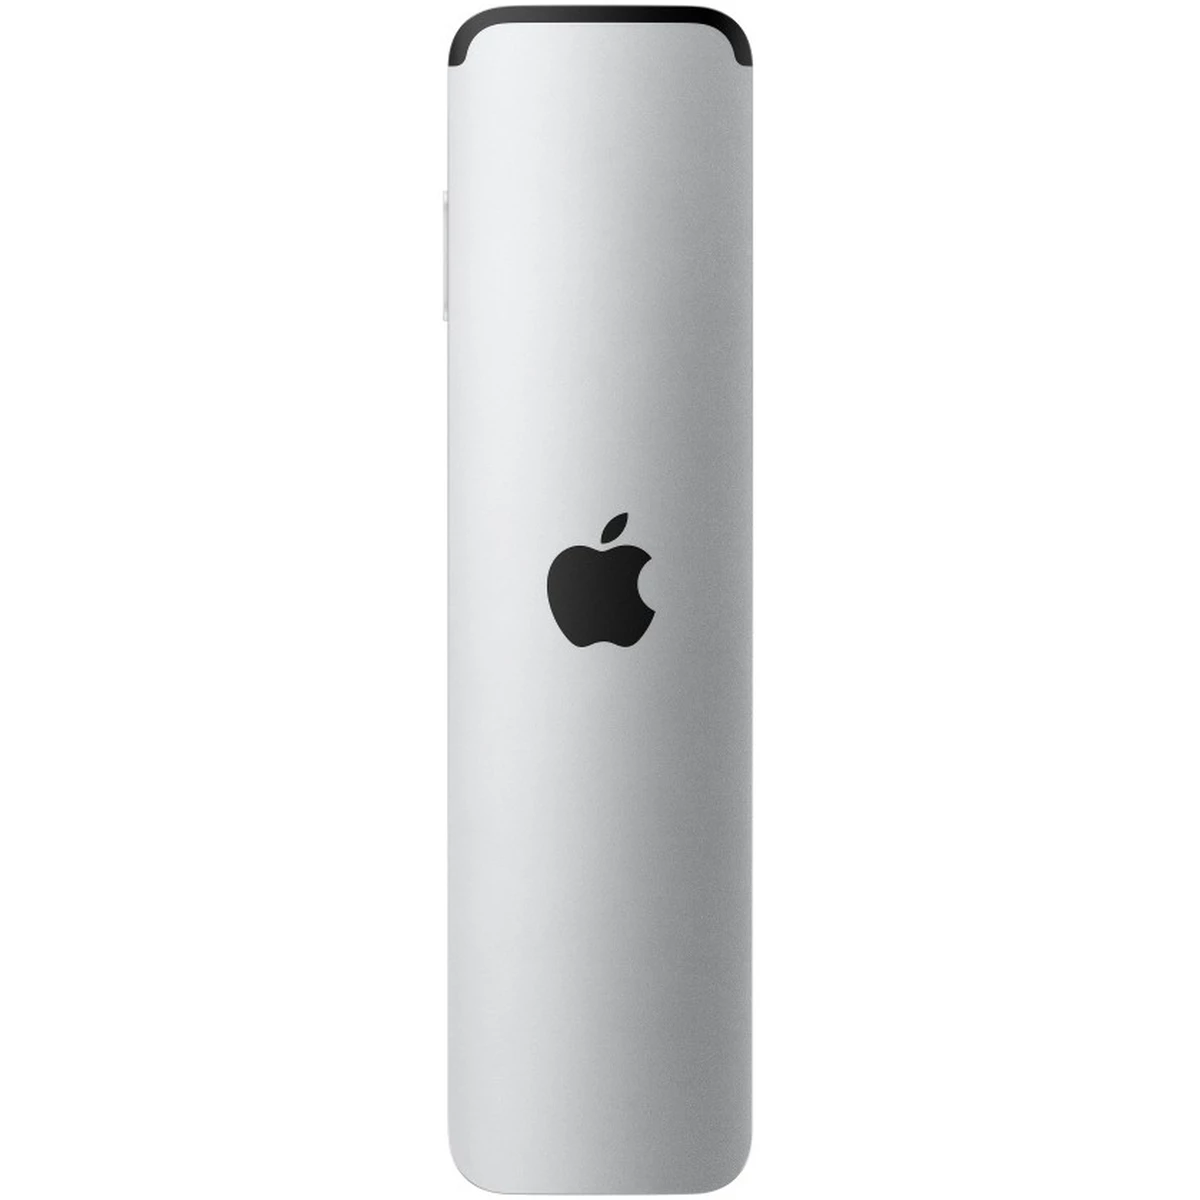 Apple Siri Remote (3. Gen.)